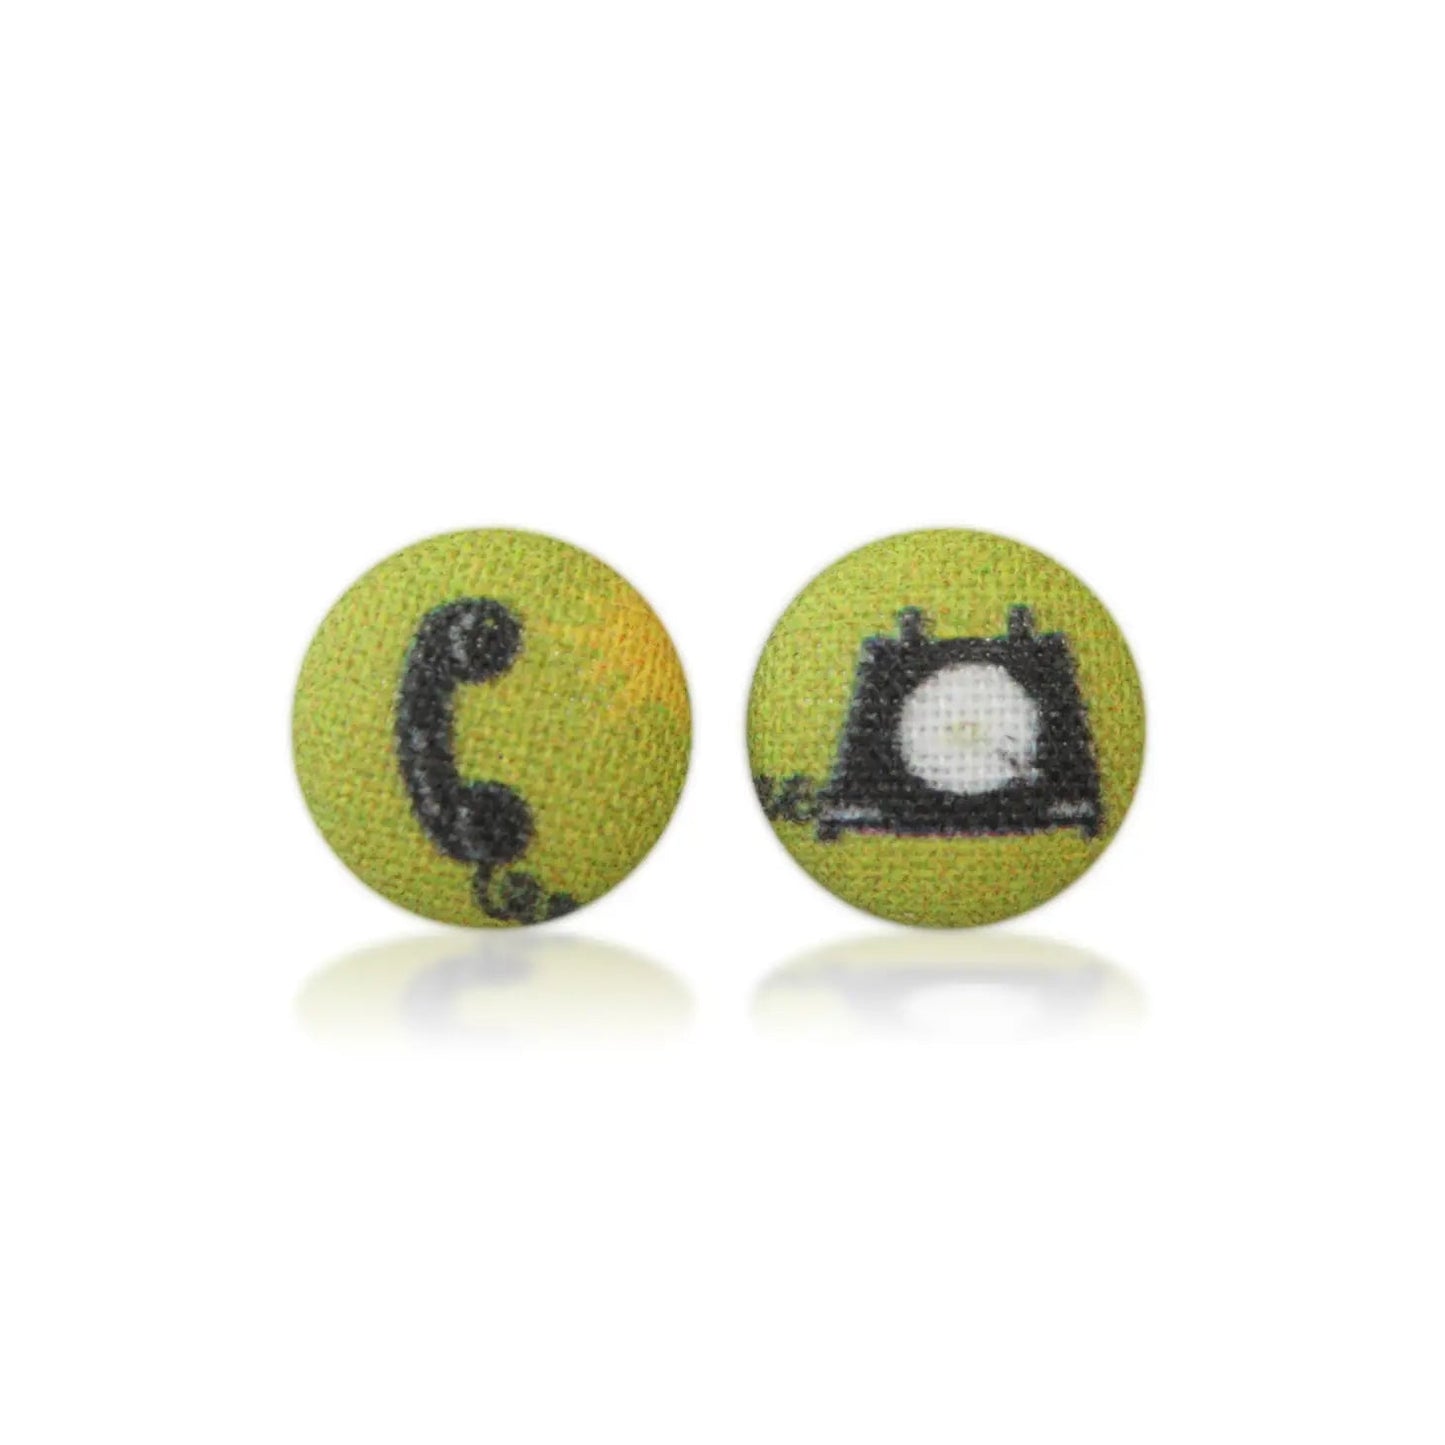 Landline Phone Fabric Button Earrings | Handmade in the US